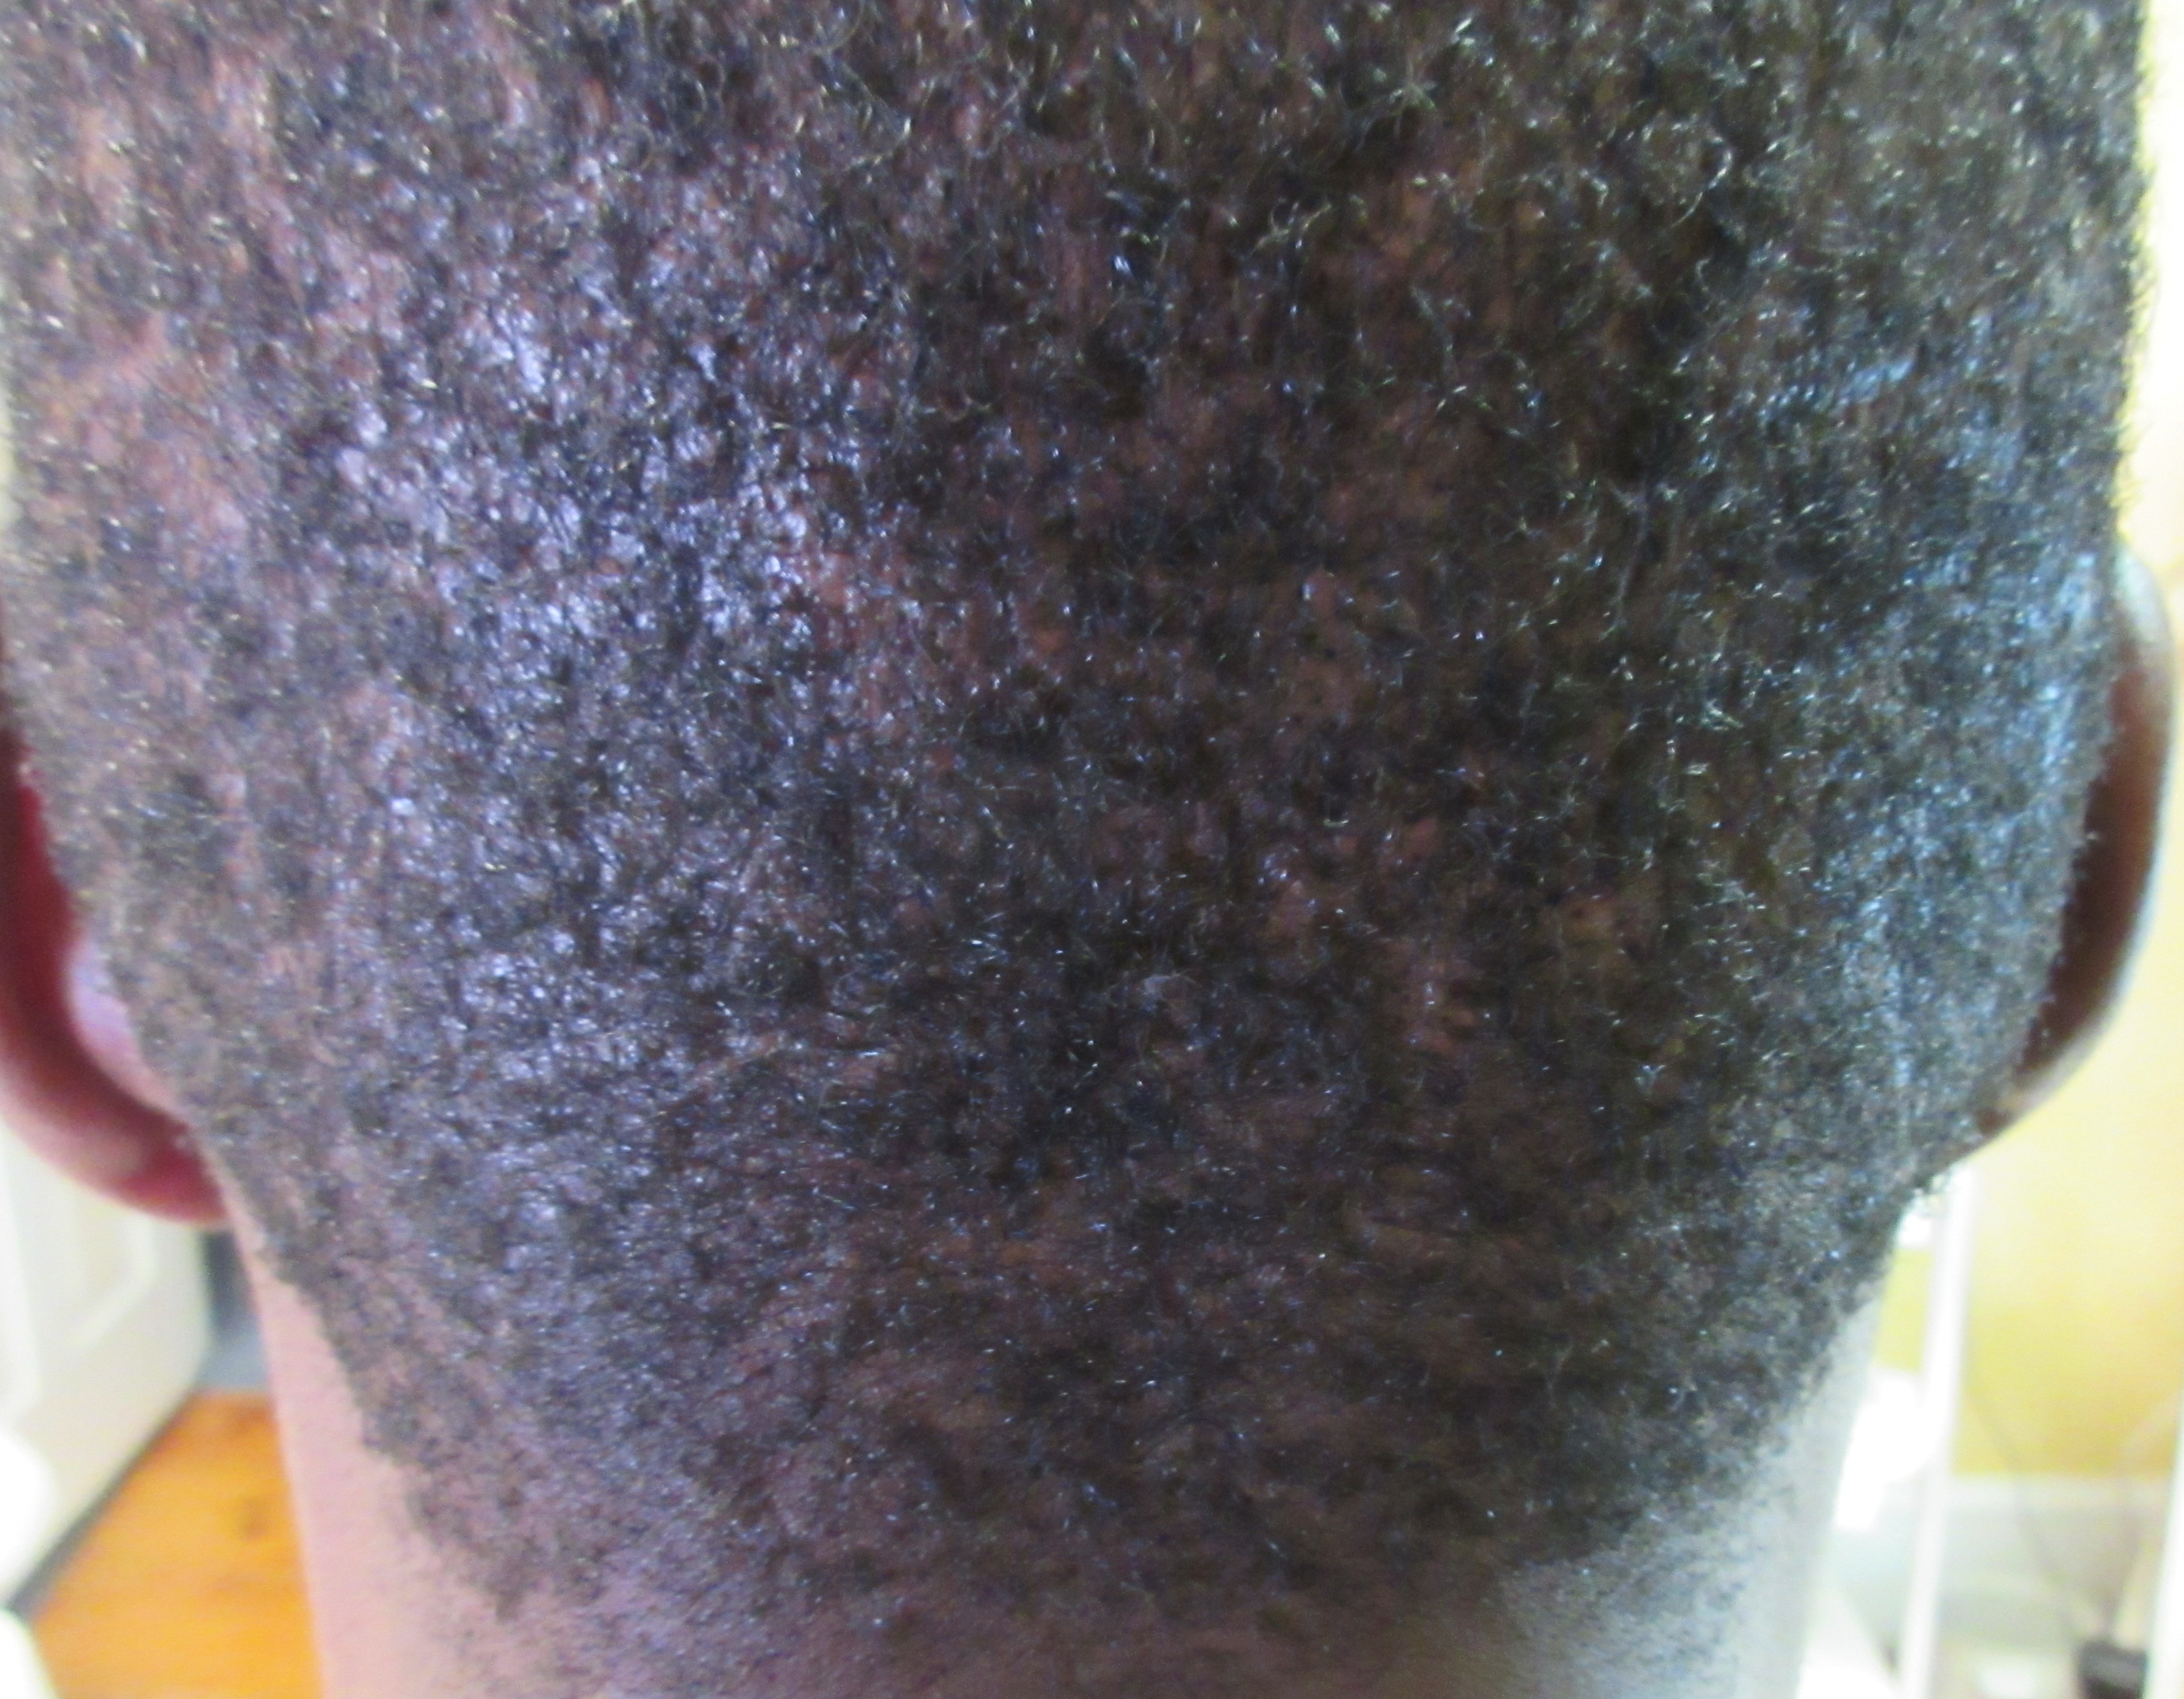 Hair transplant scar